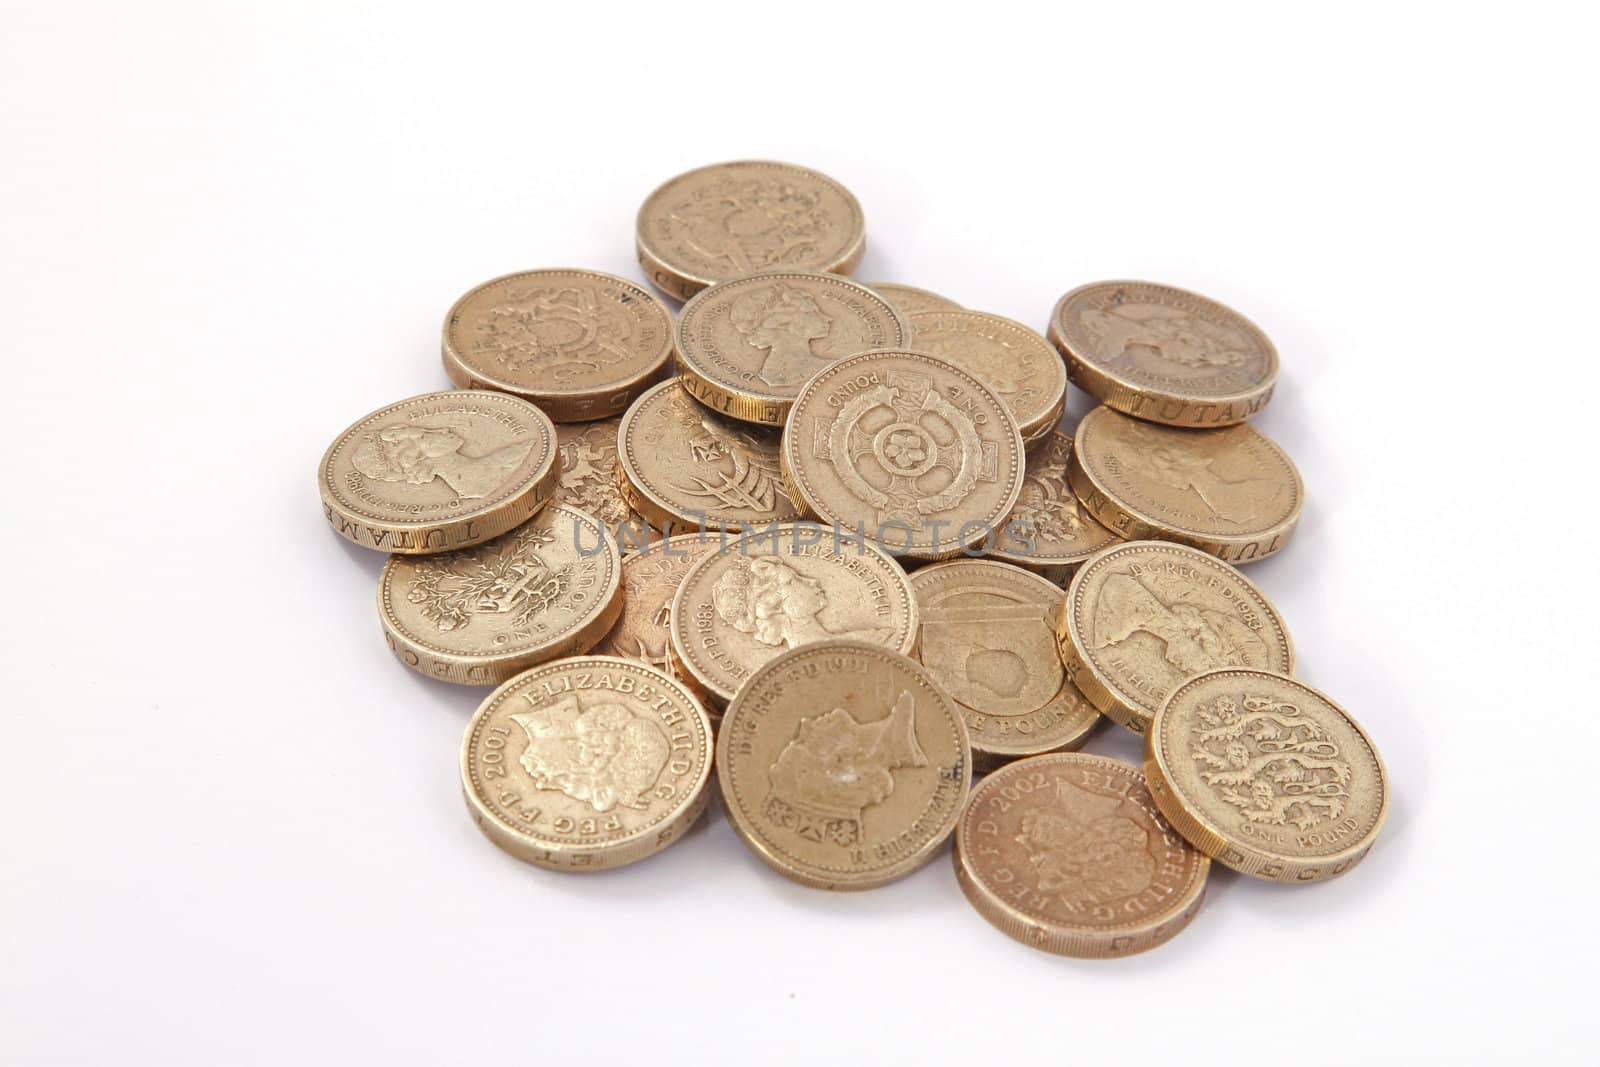 British, UK, pound coins on a plain white background.